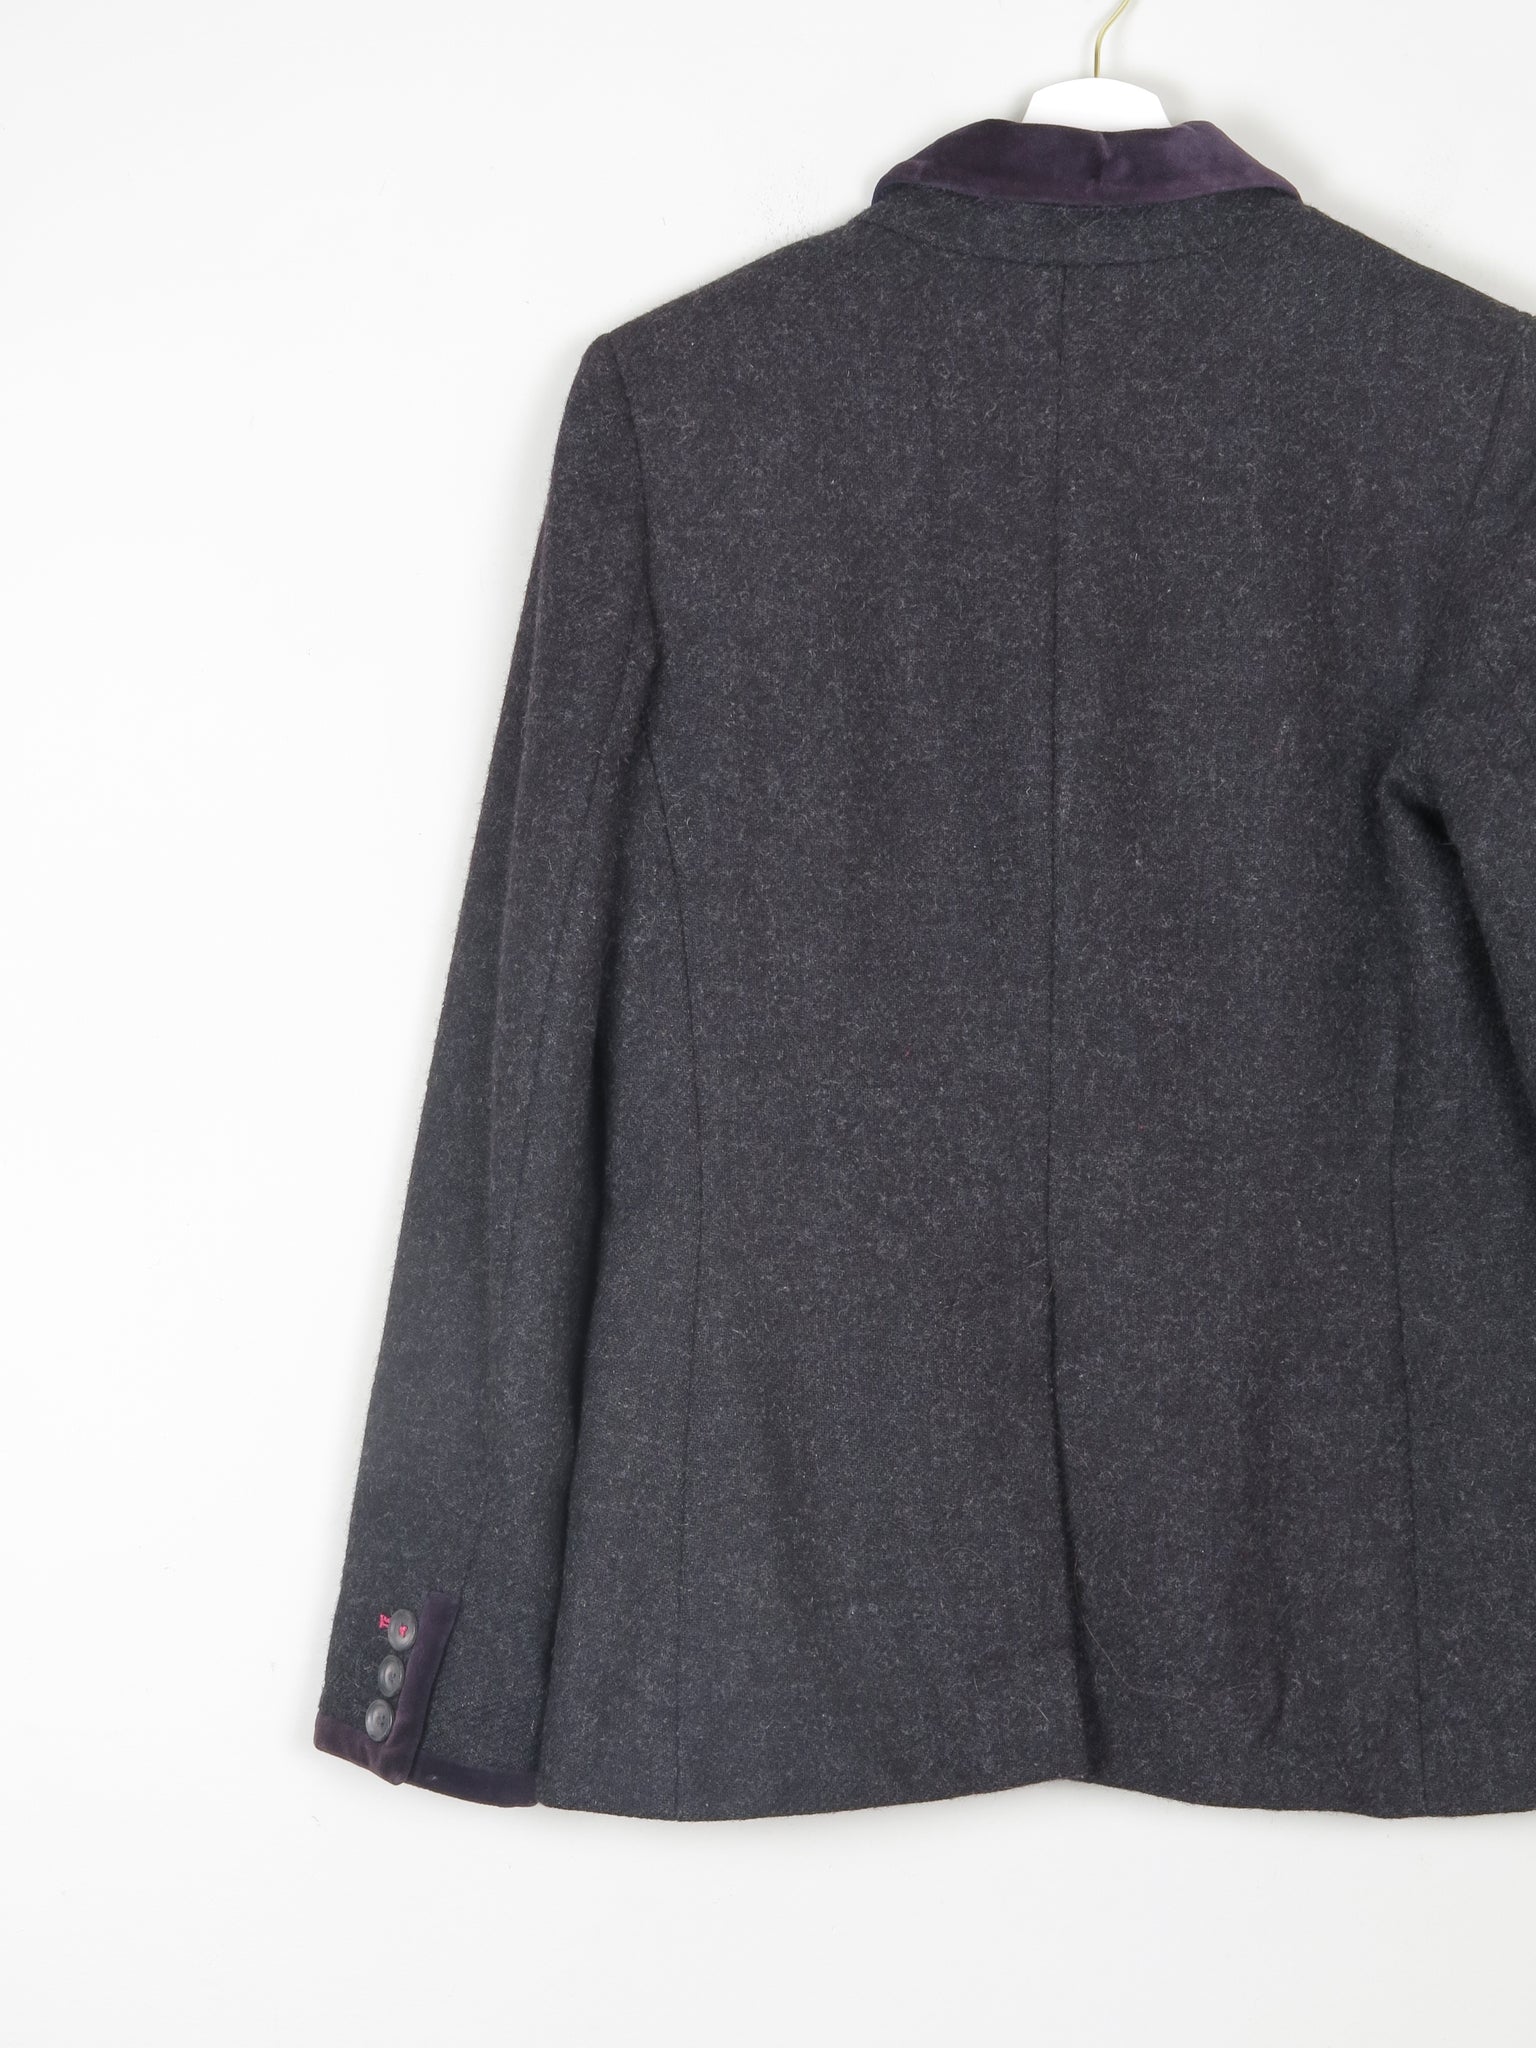 Women's Charcoal Tweed Boden Tailored Jacket 10/12